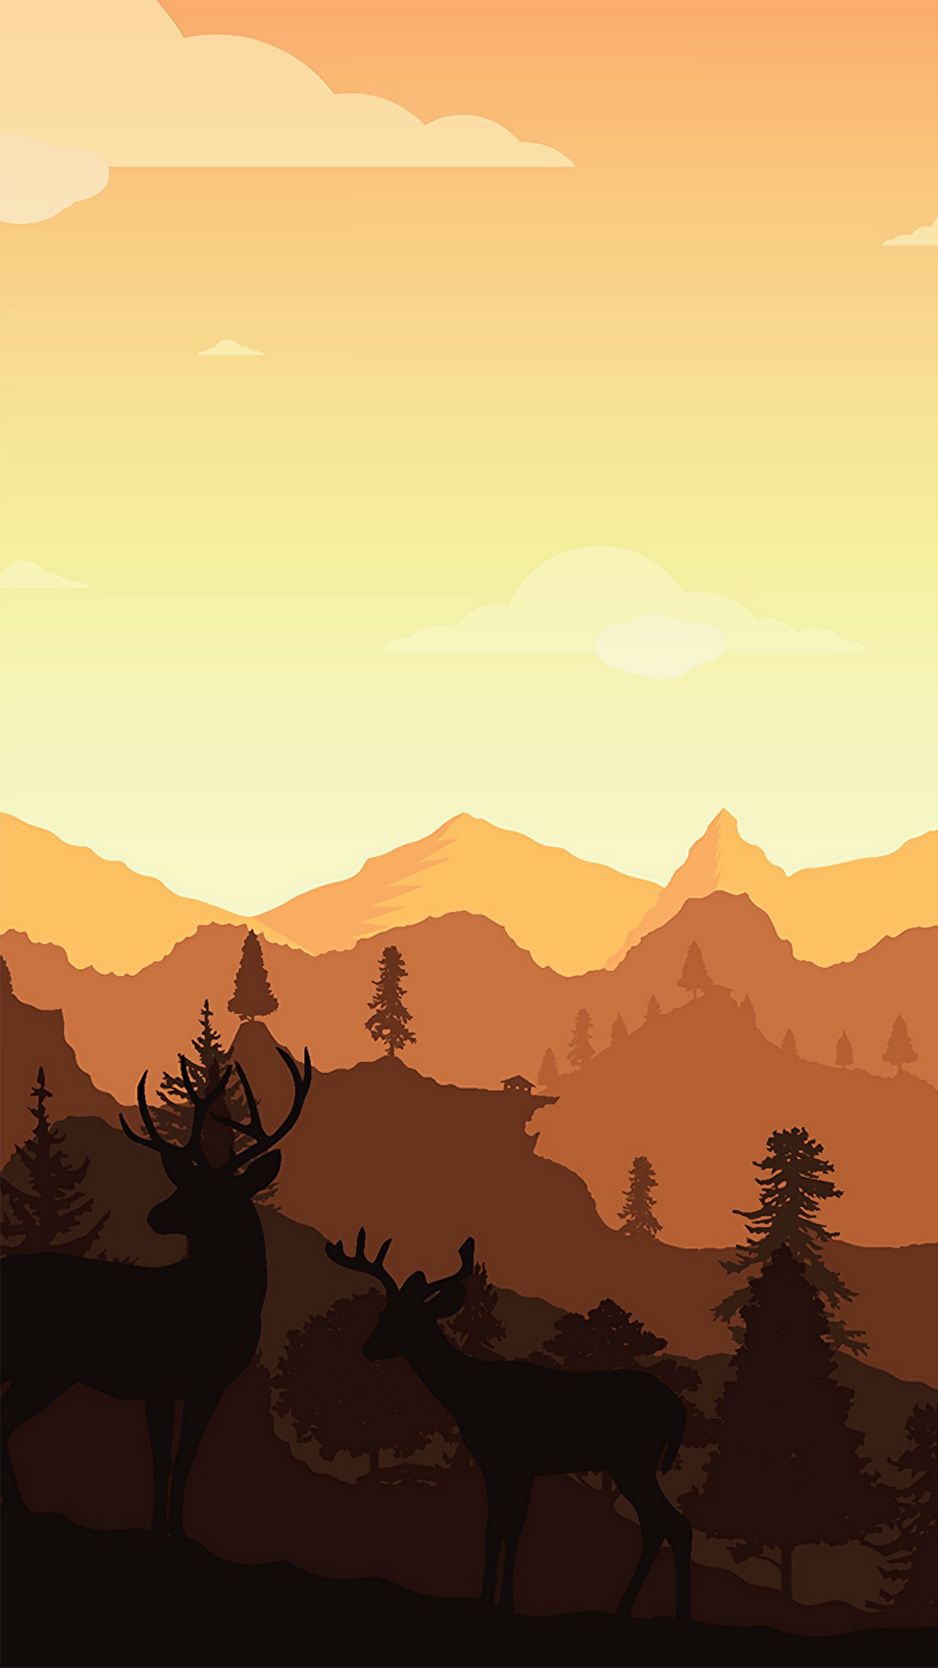 Silhouette Deer Sunset iPhone Wallpaper